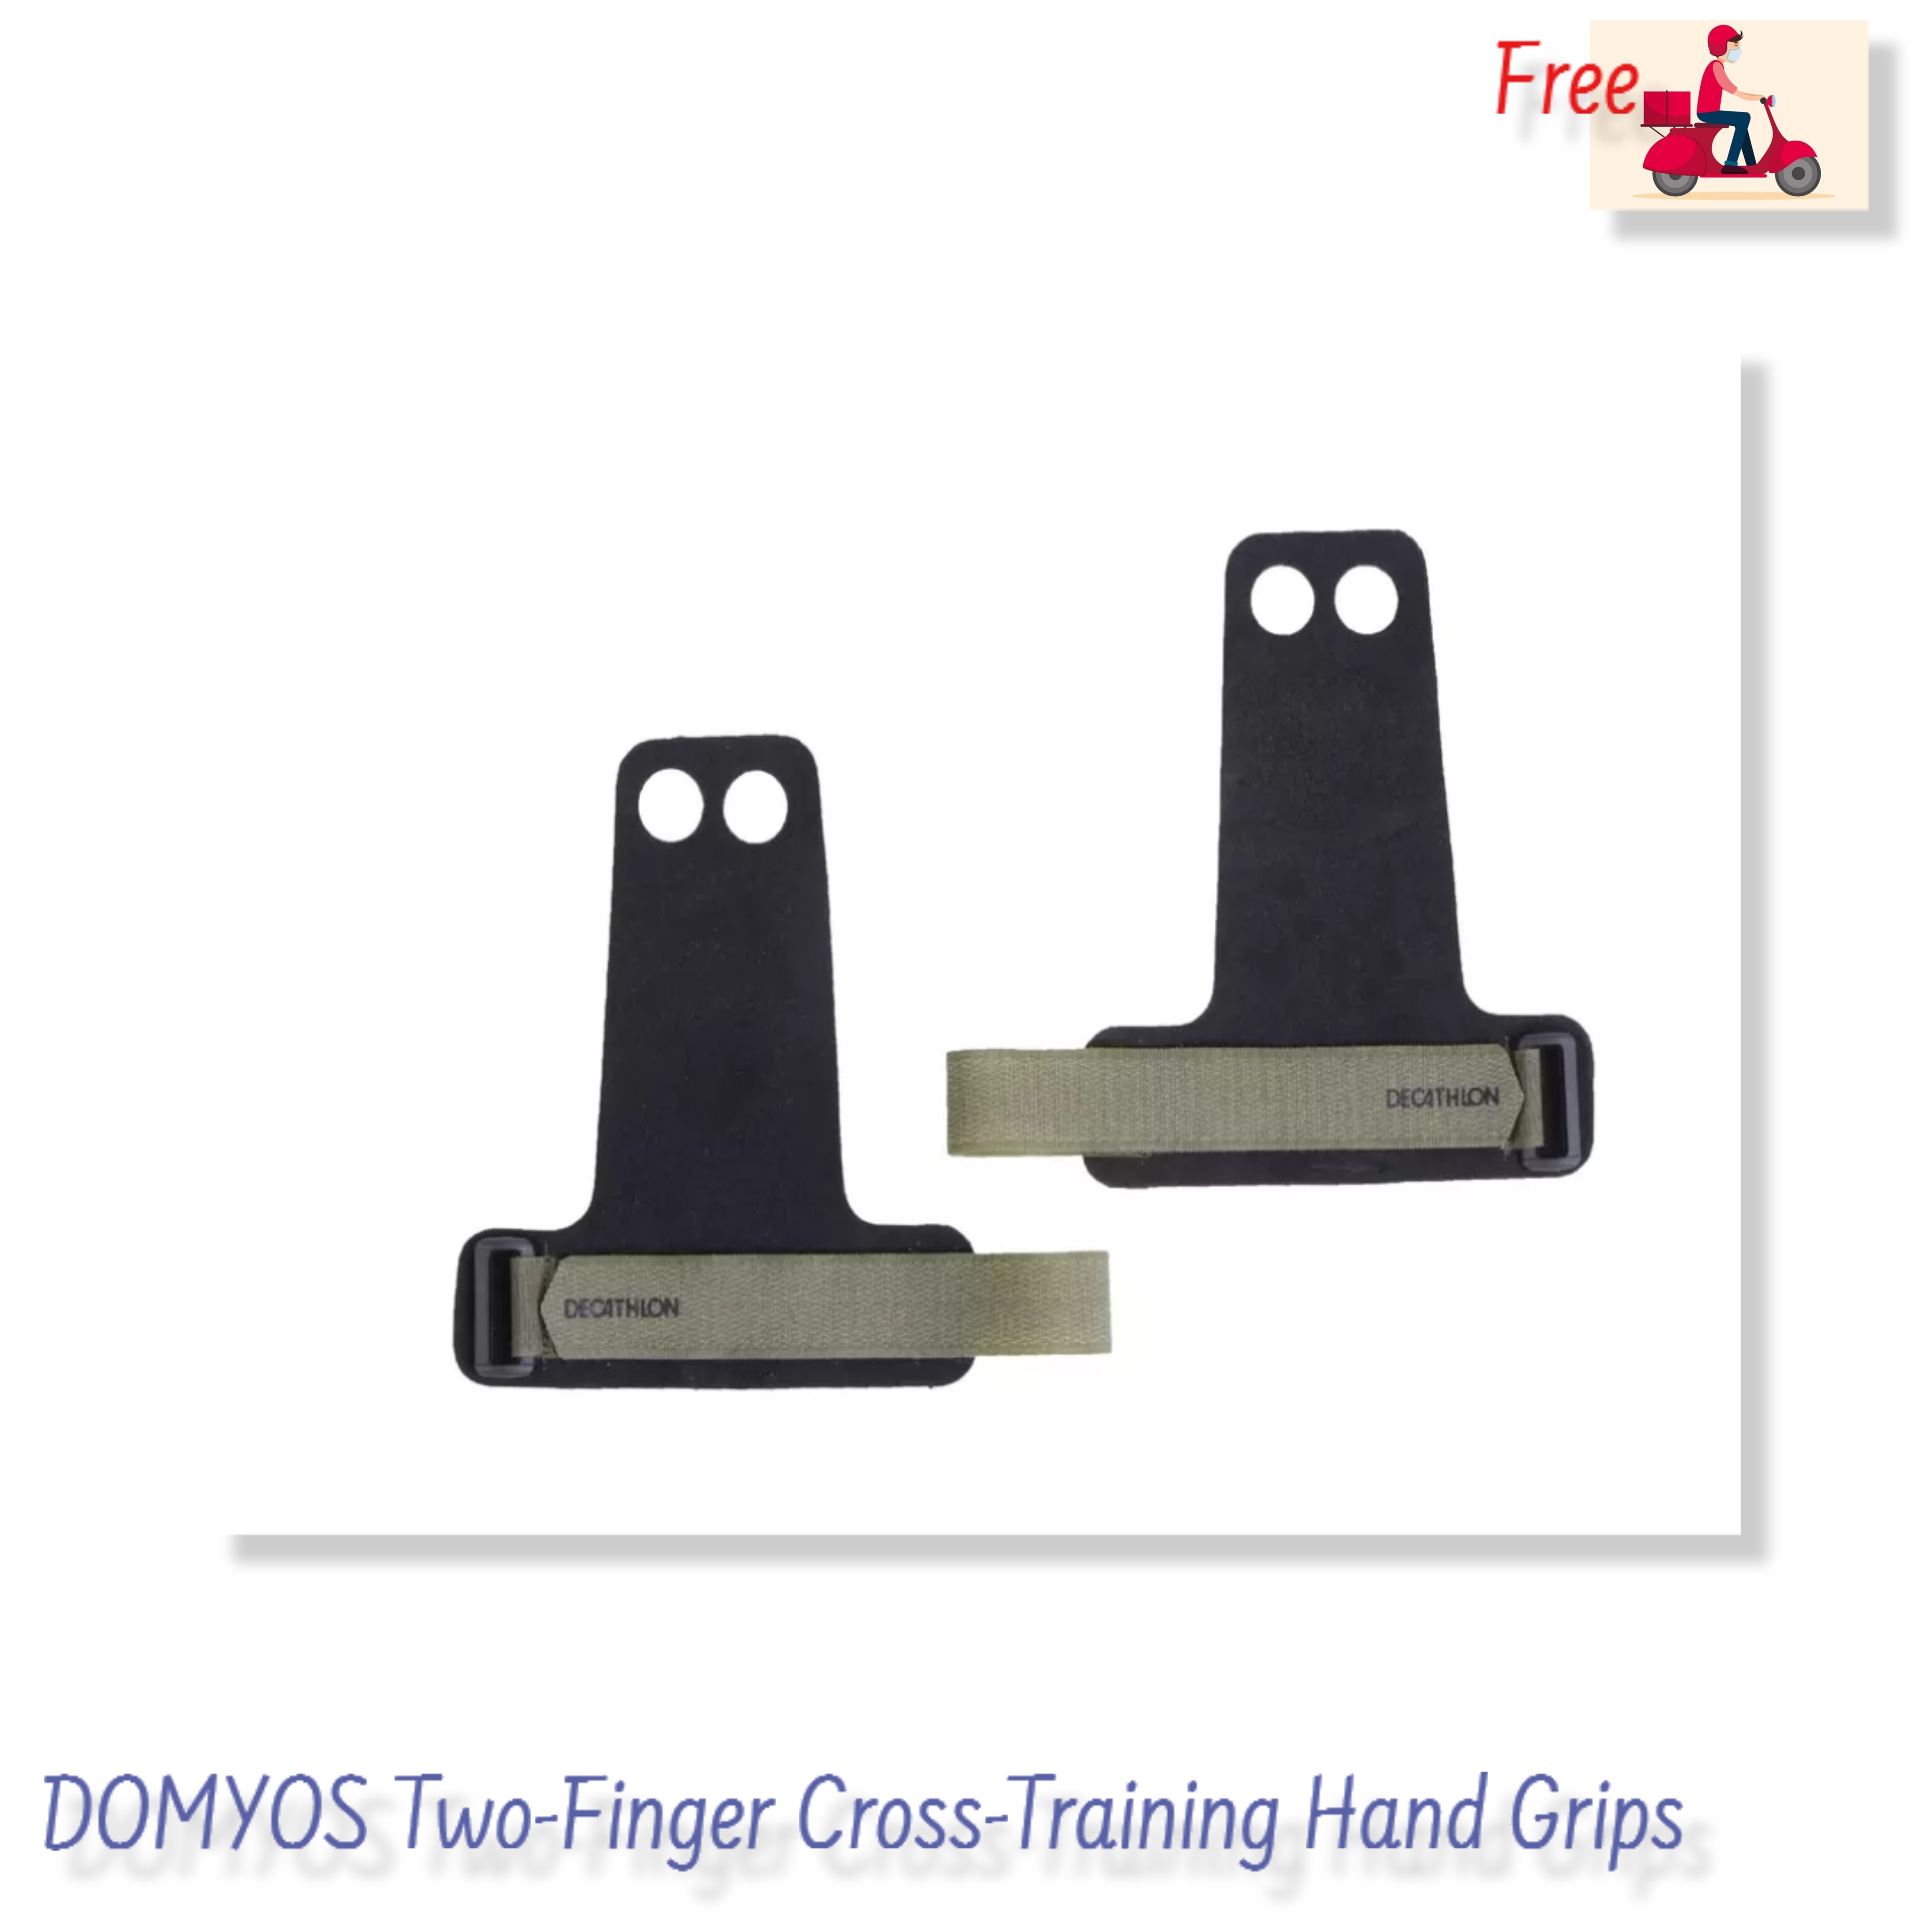 Two-Finger Cross-Training Hand Grips แฮนด์กริป สองนิ้วสำหรับ การออกกำลังกาย แบบผสมผสาน